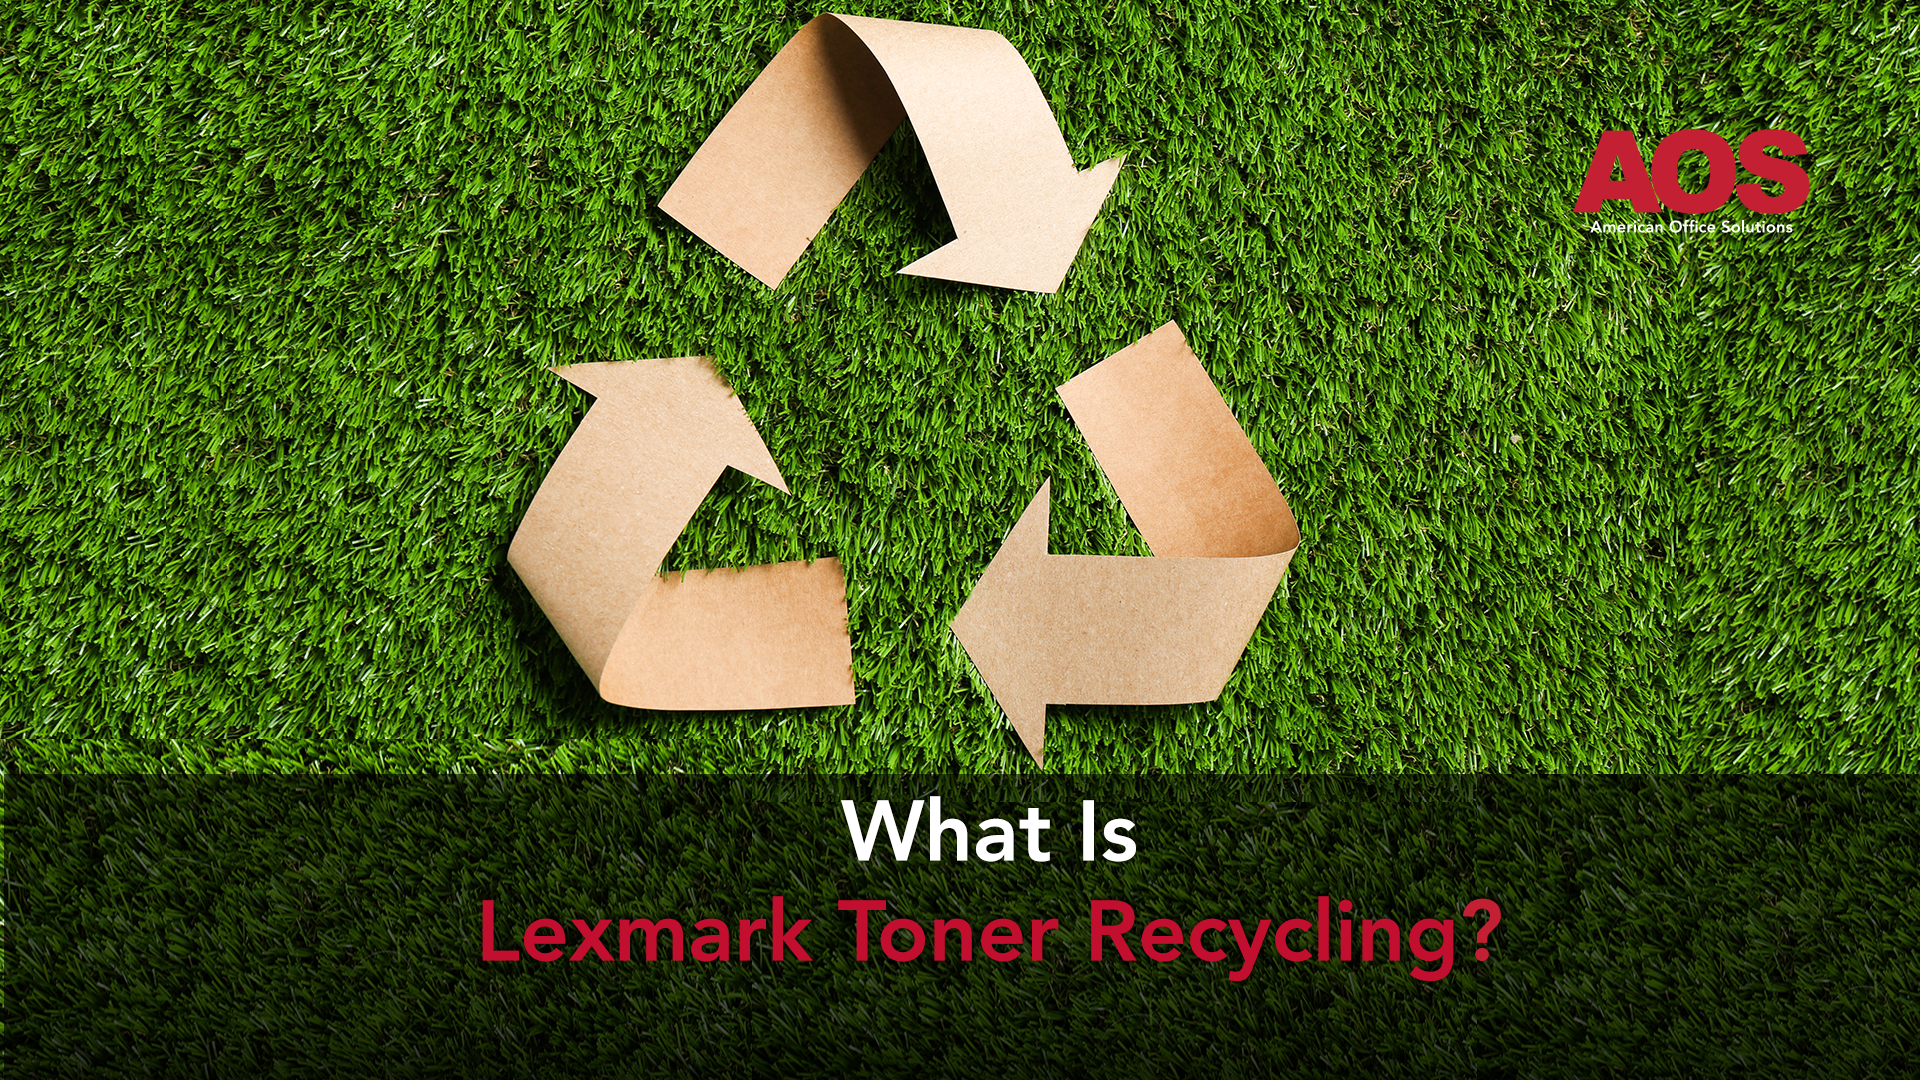 Lexmark Toner Recycling